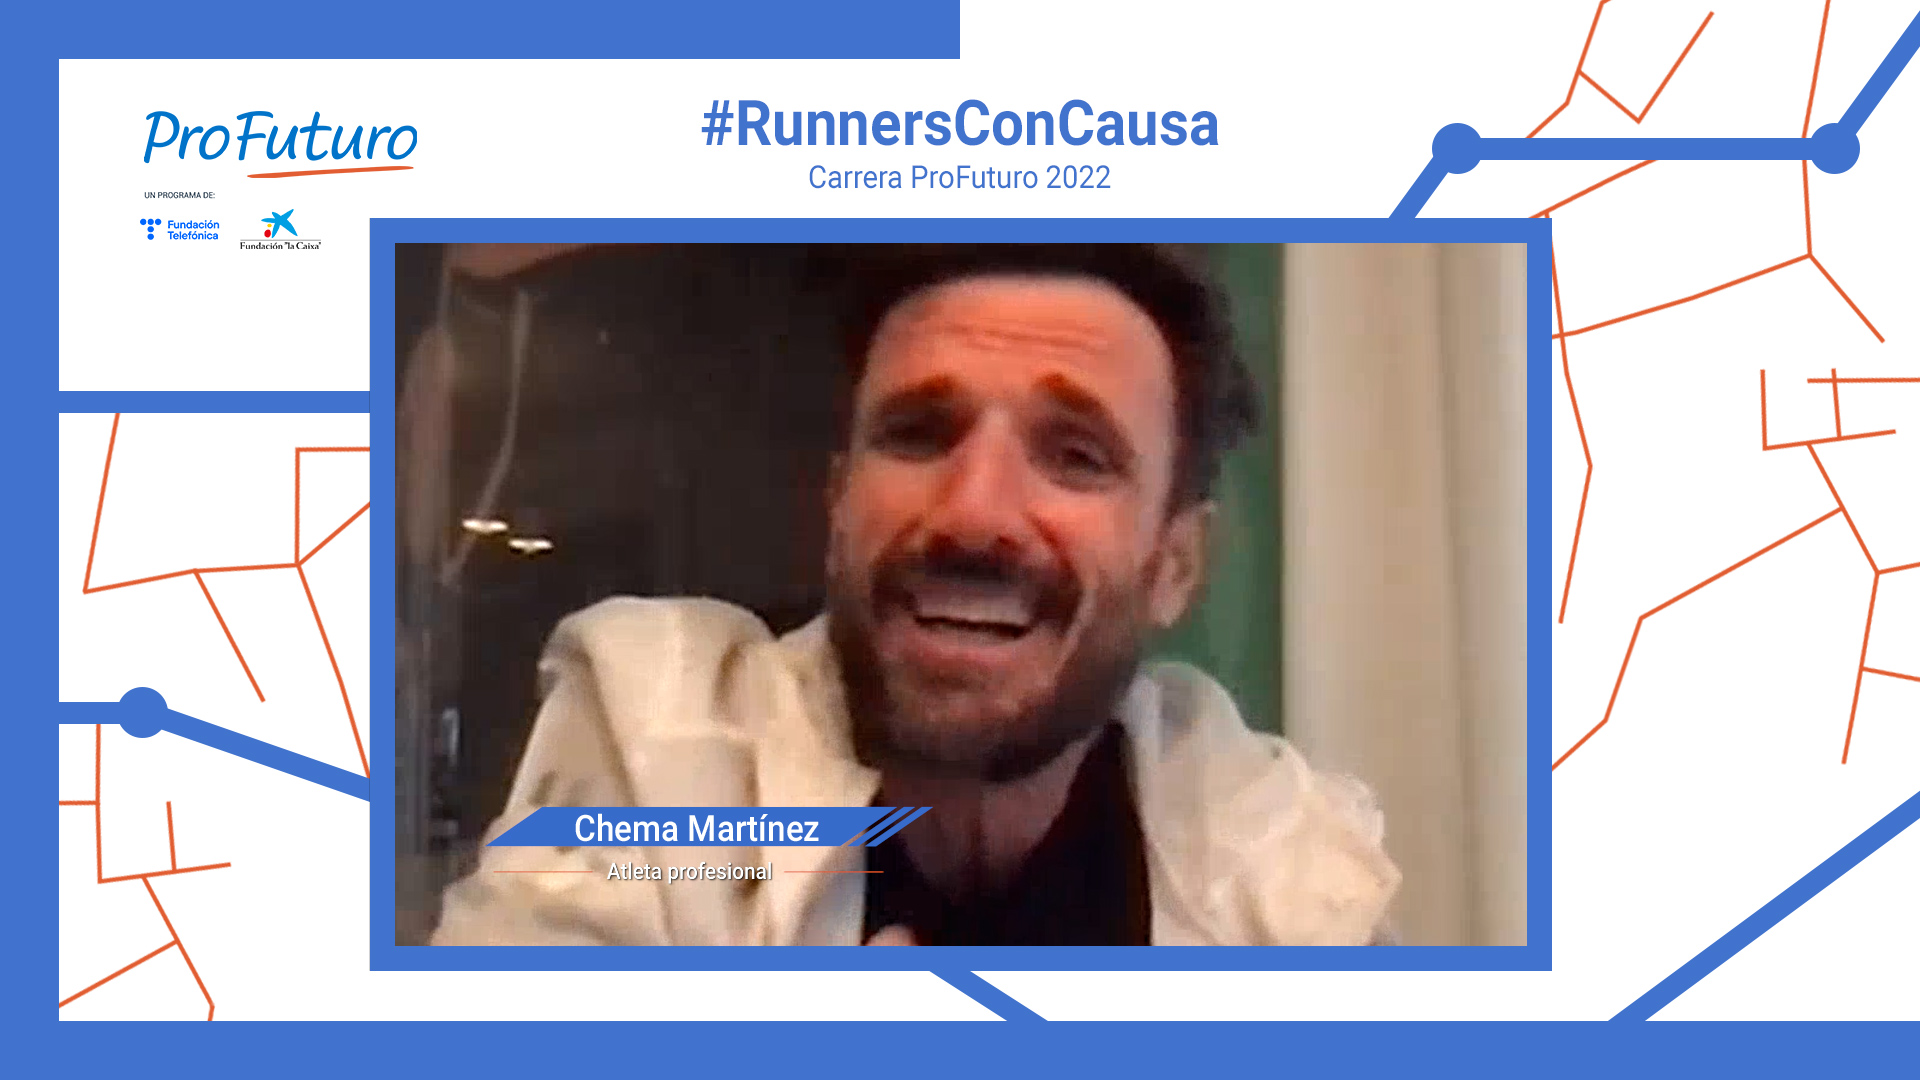 Chegam os #RunnersConCausa de Chema Martinez